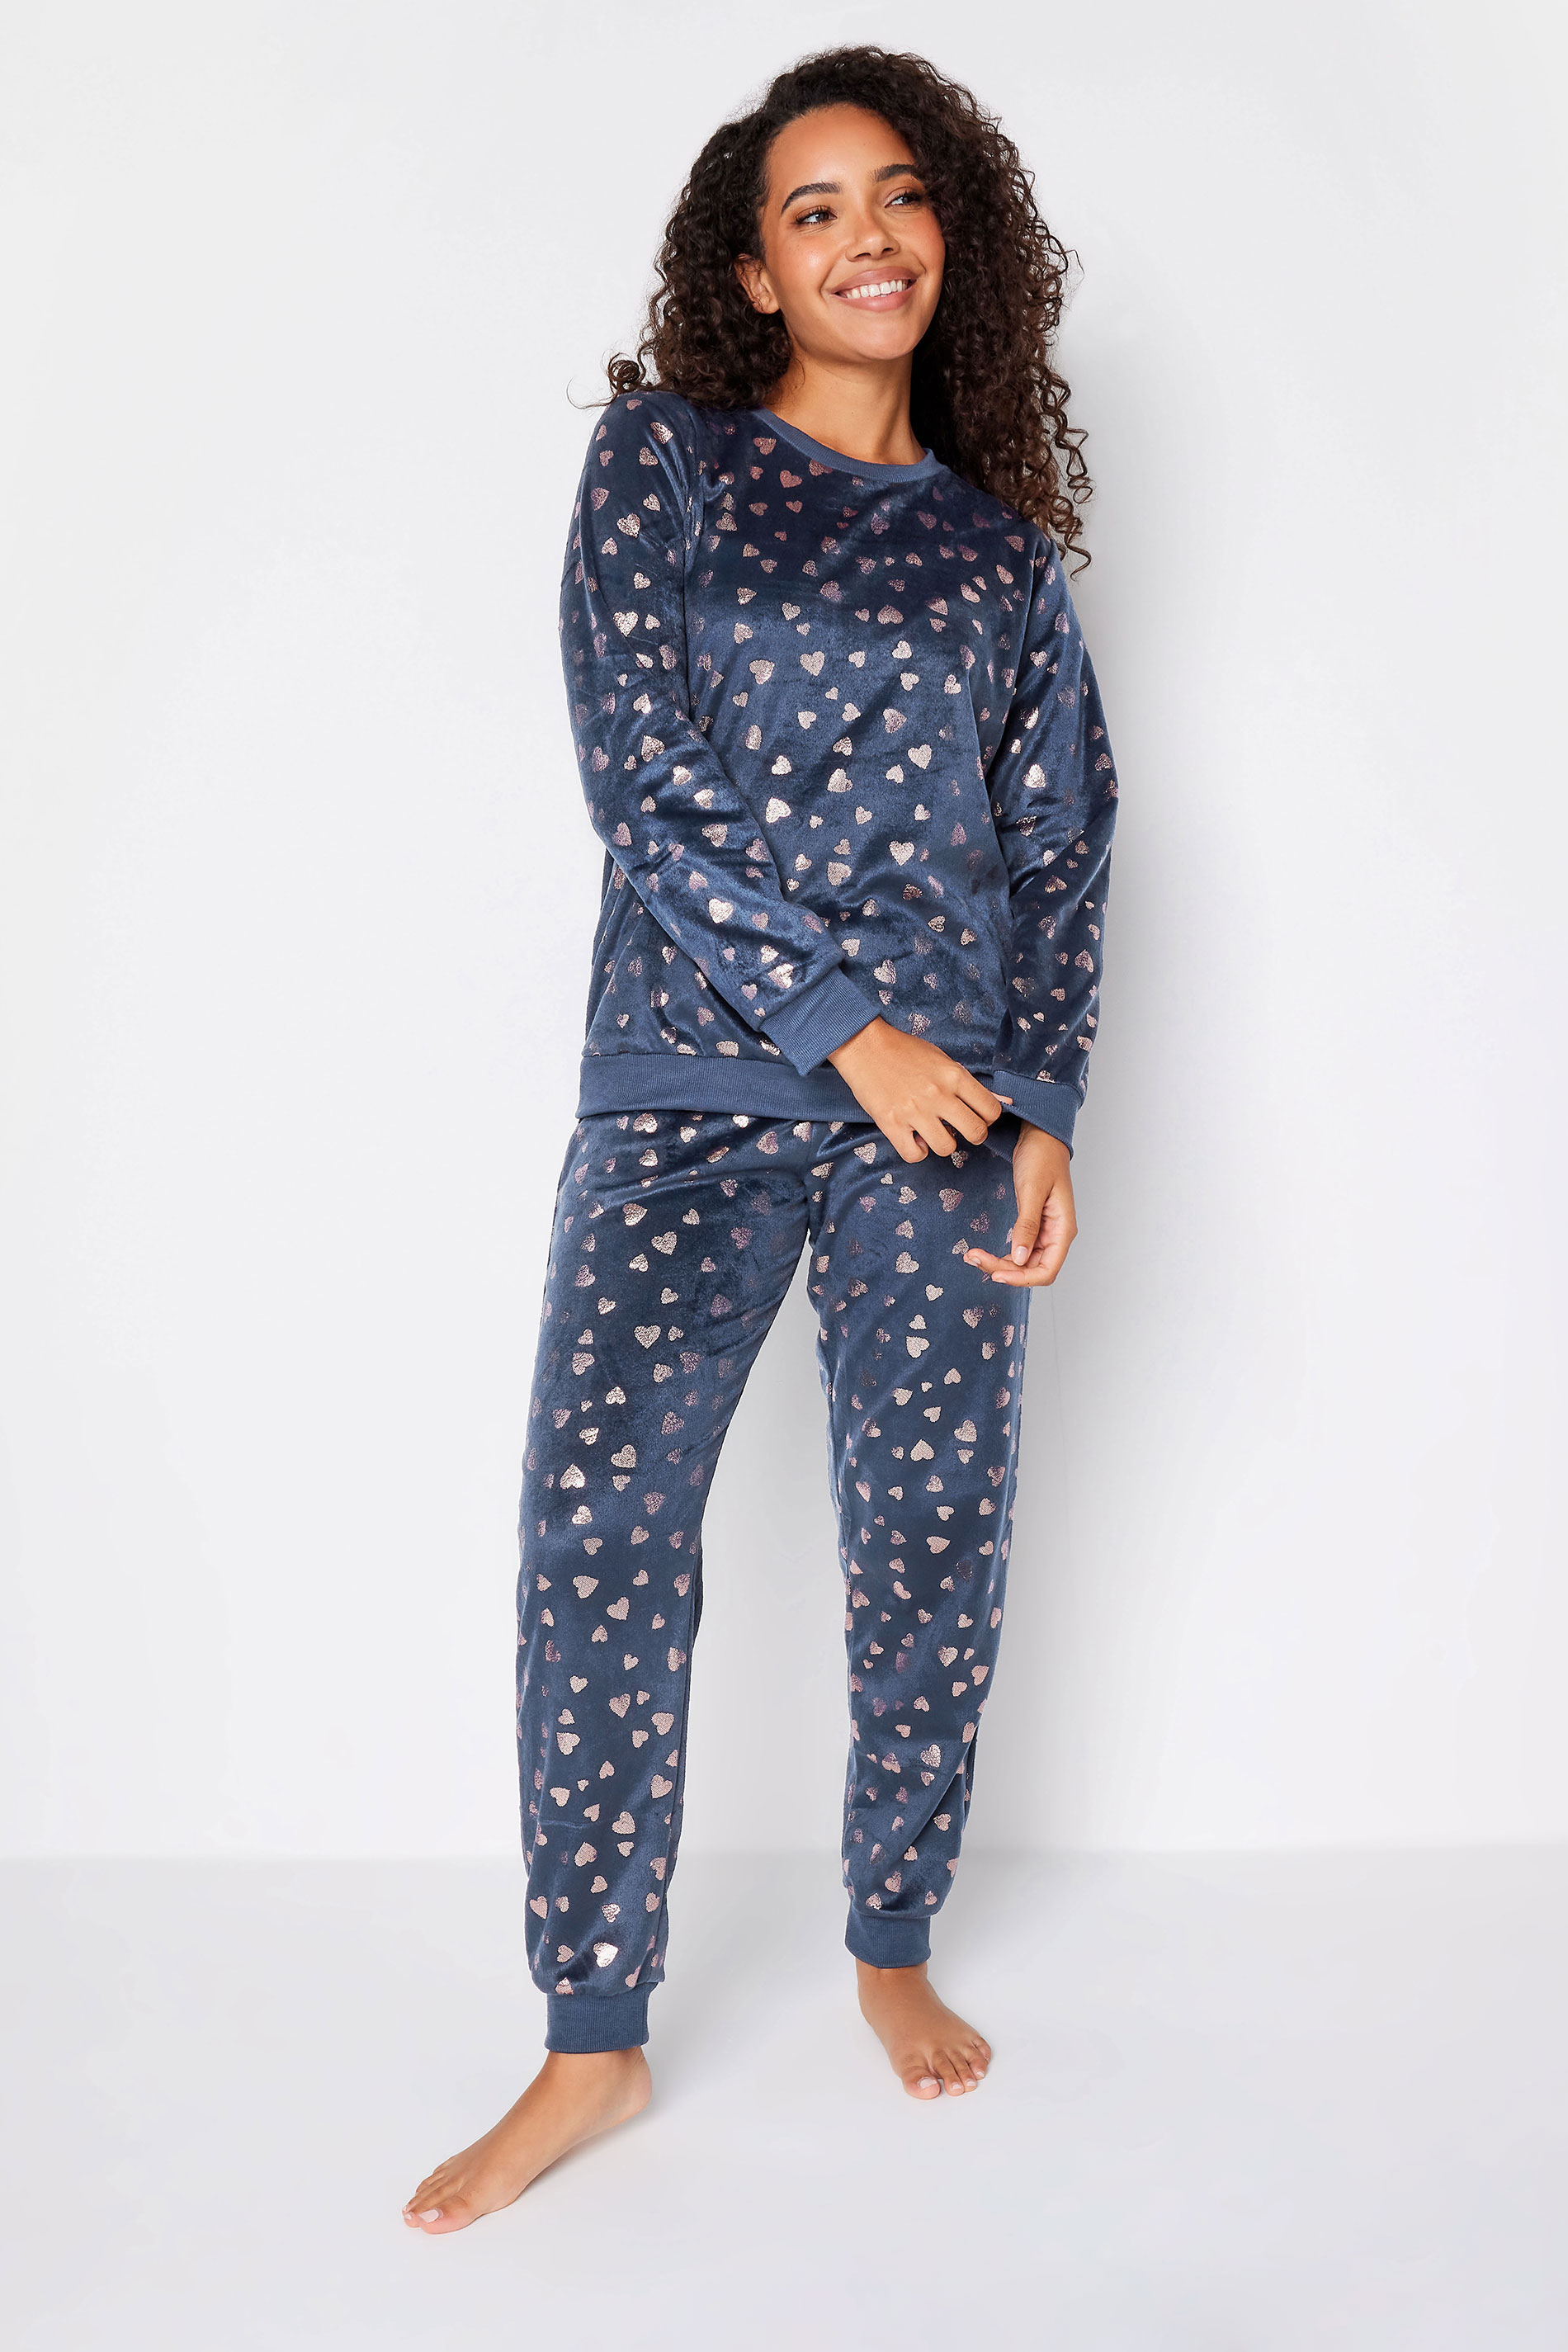 M&Co Blue Foil Heart Print Fleece Pyjama Lounge Set